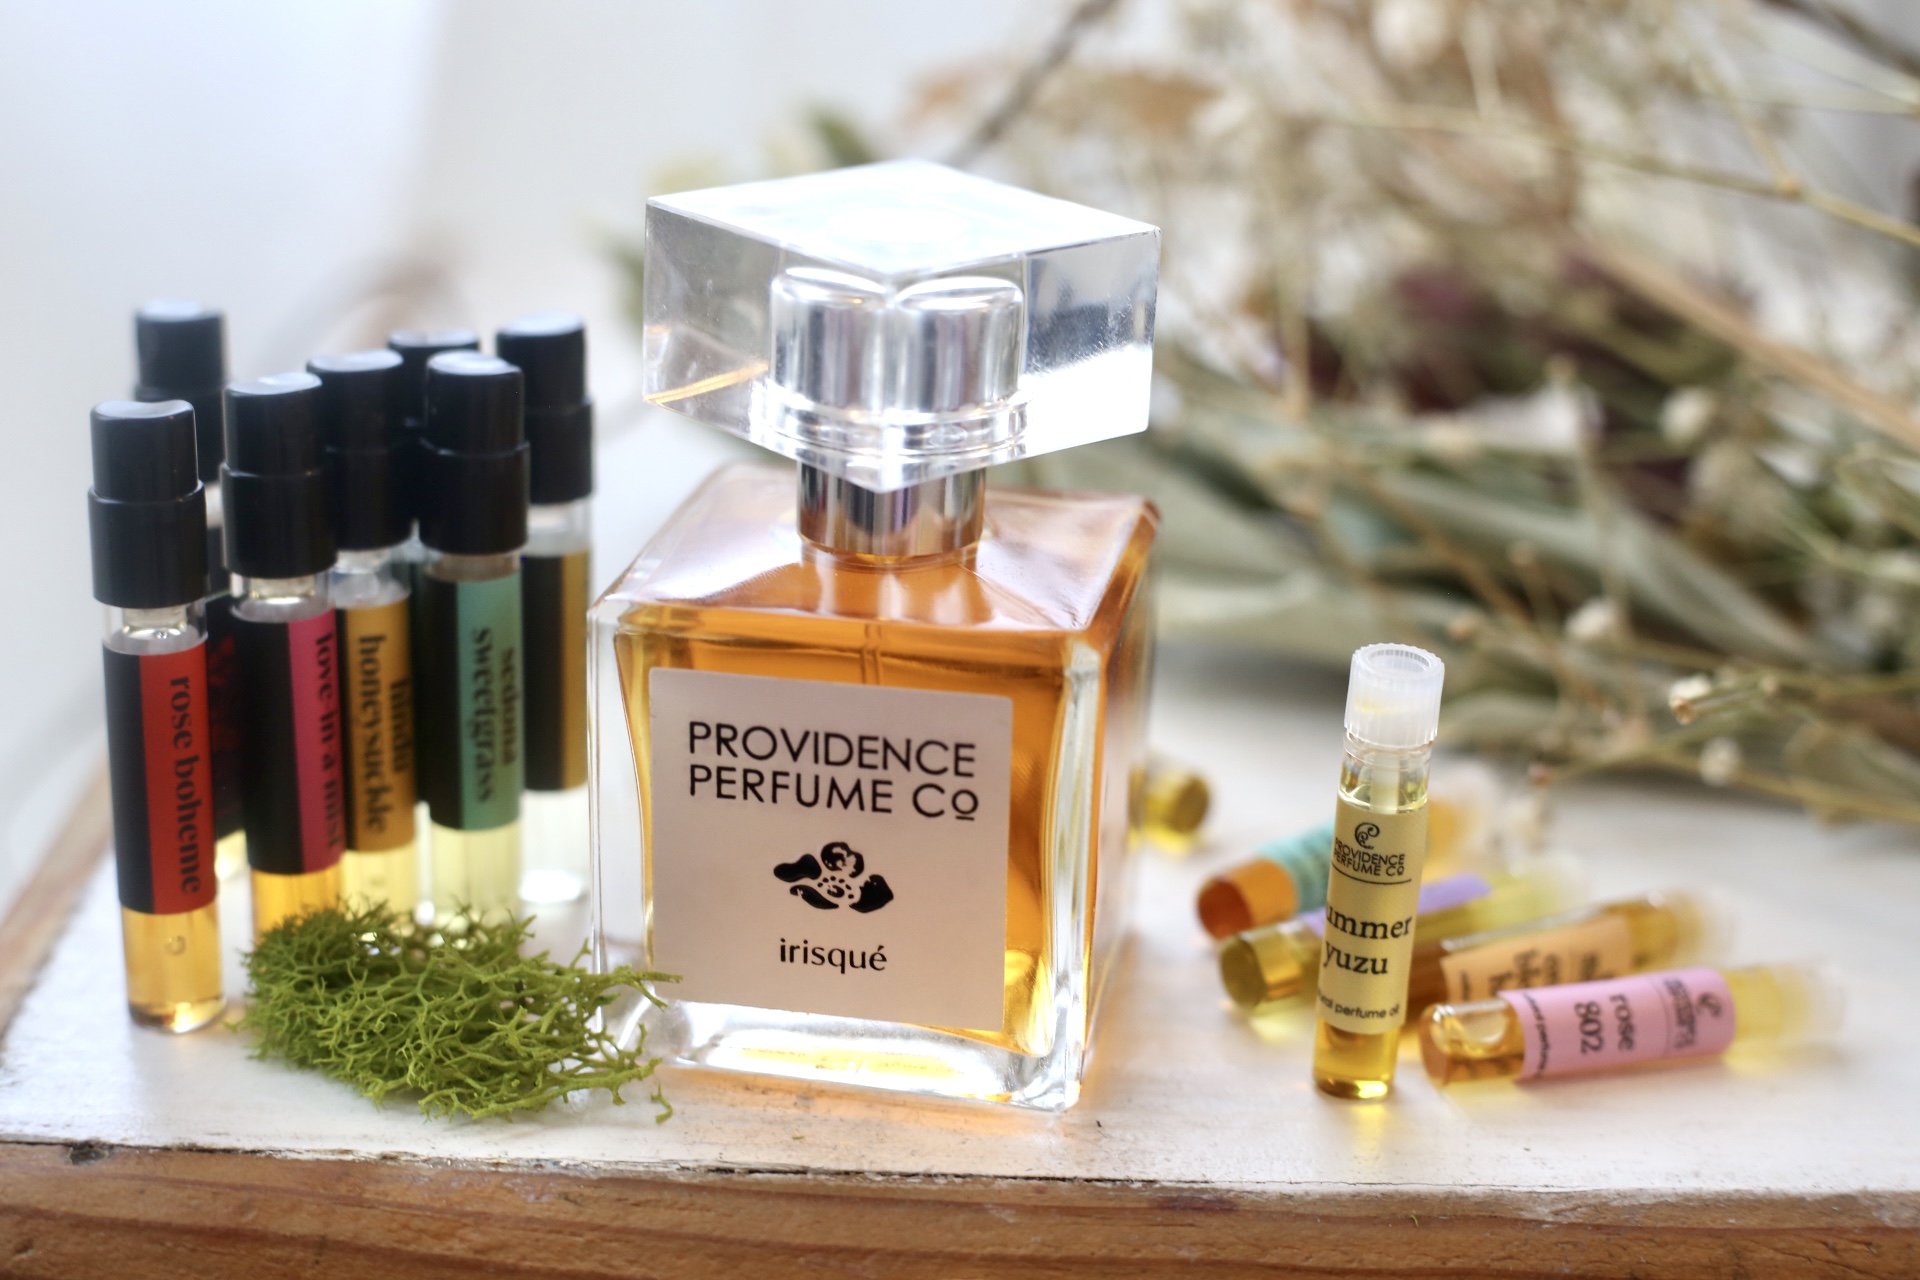 Providence perfume co organic